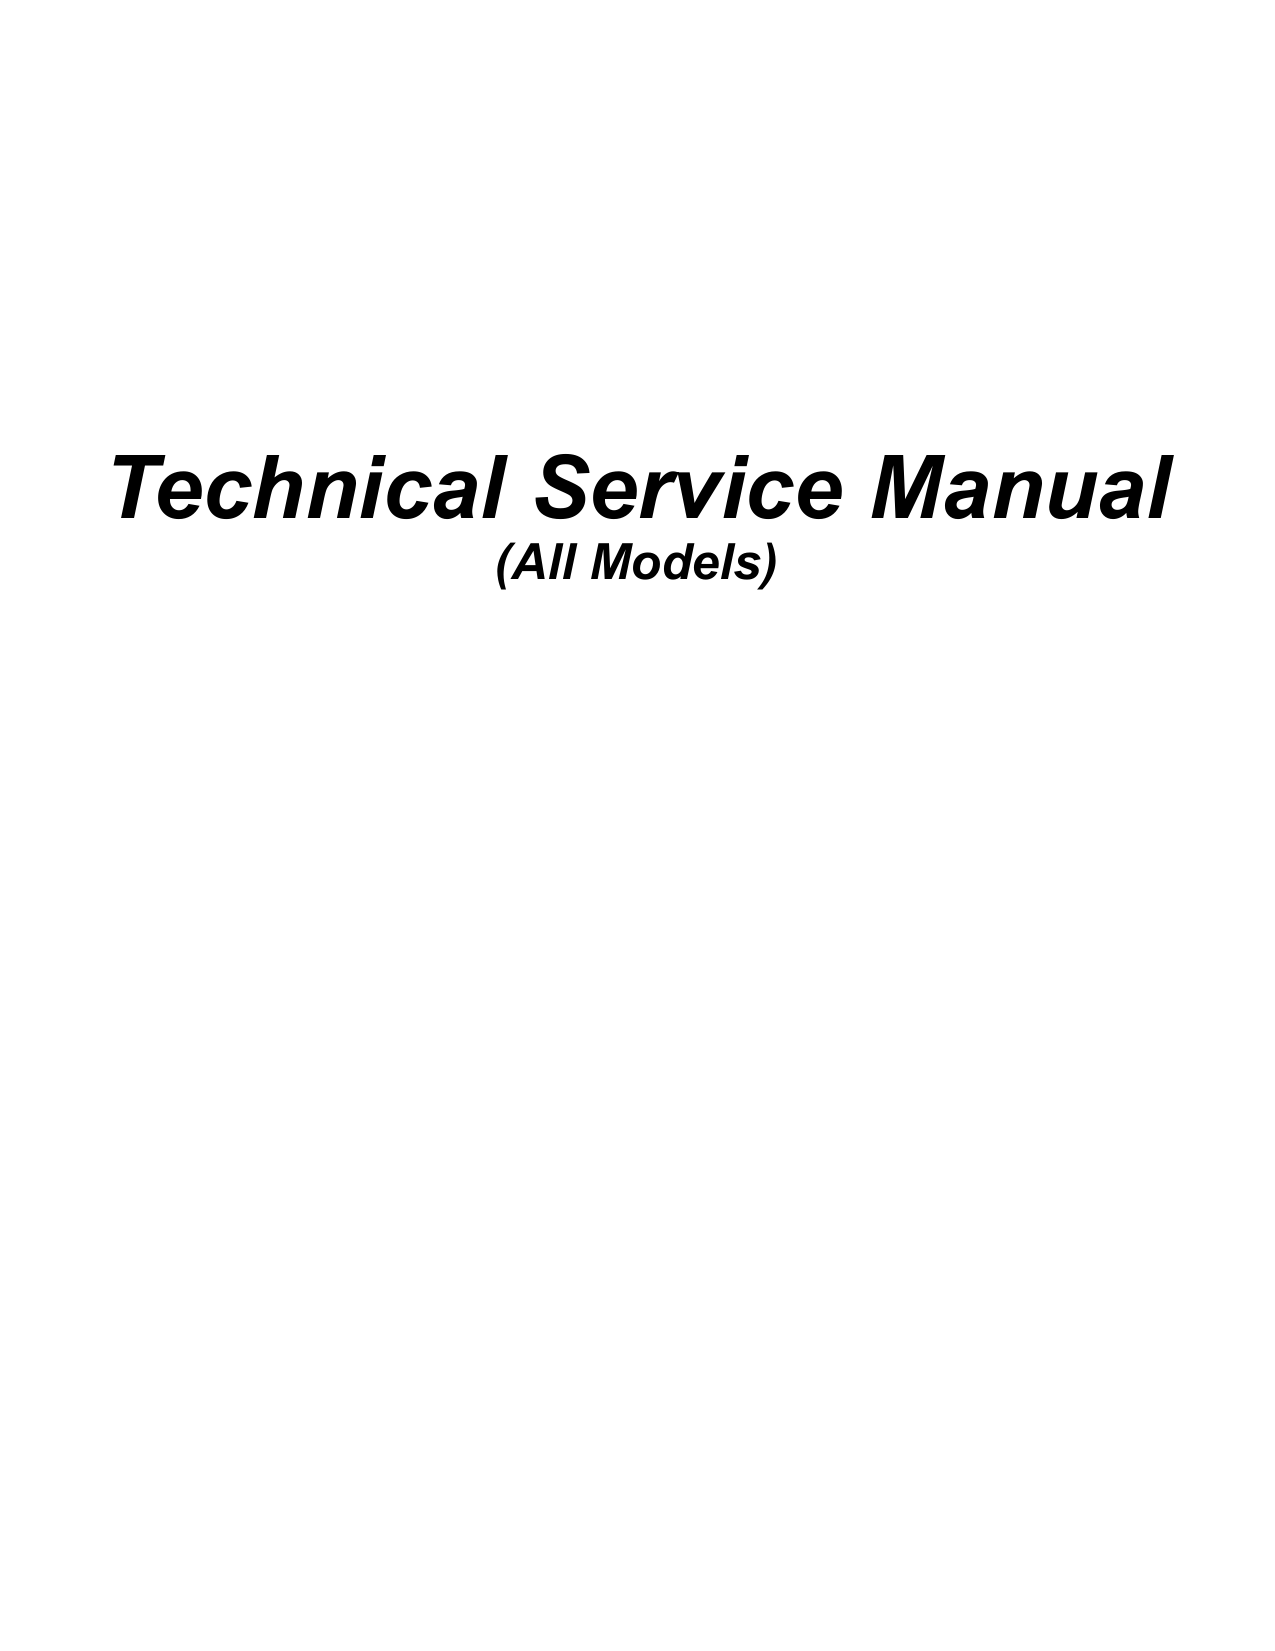 pdf for True Refrigerator TS-23G-2 manual